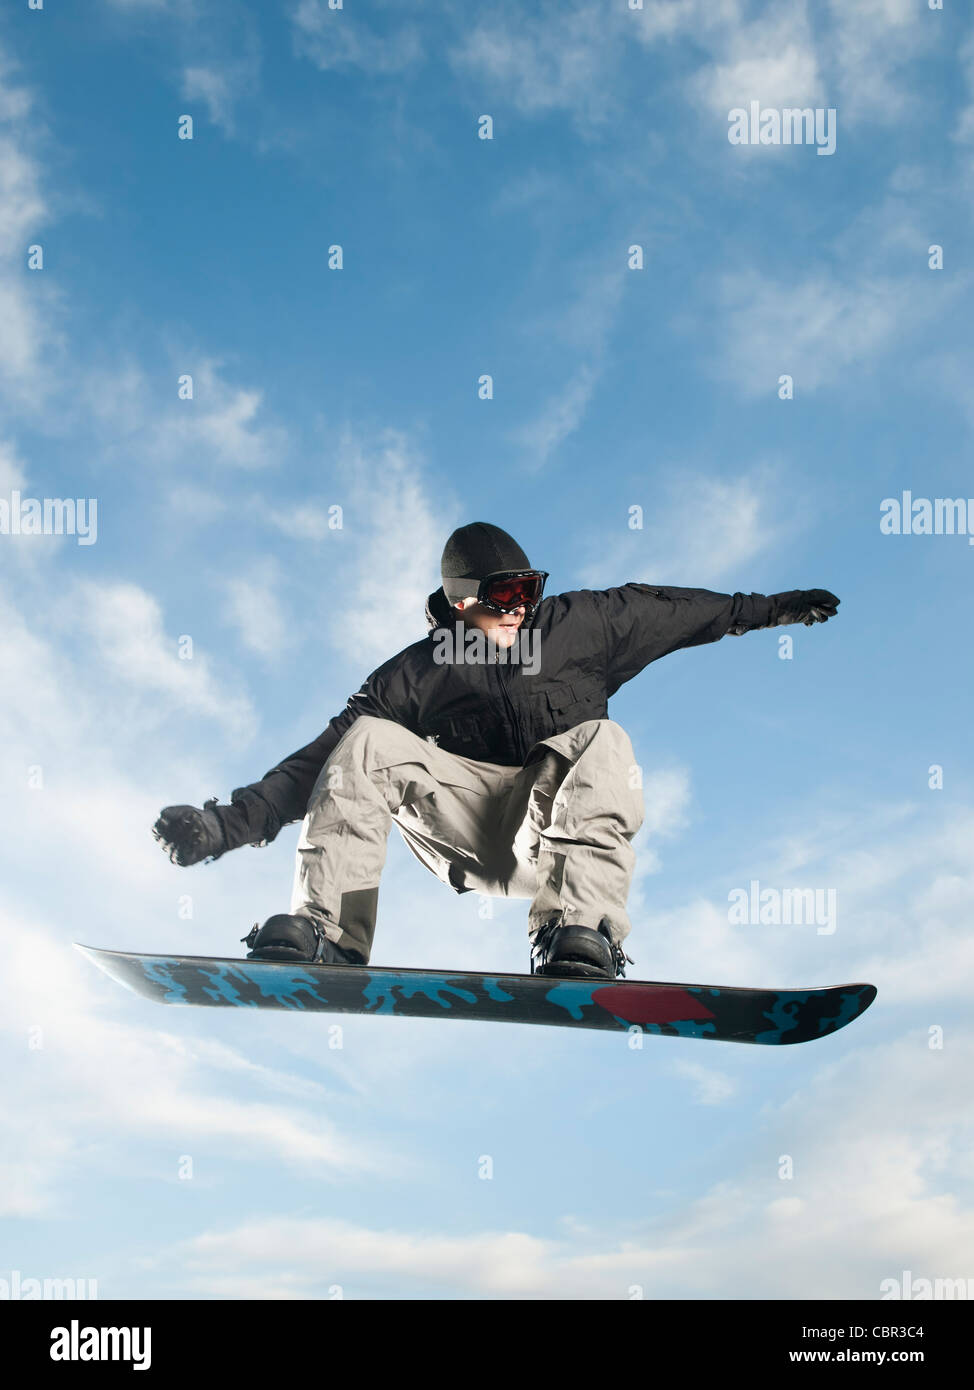 Caucasian man on snowboard in mid-air Stock Photo